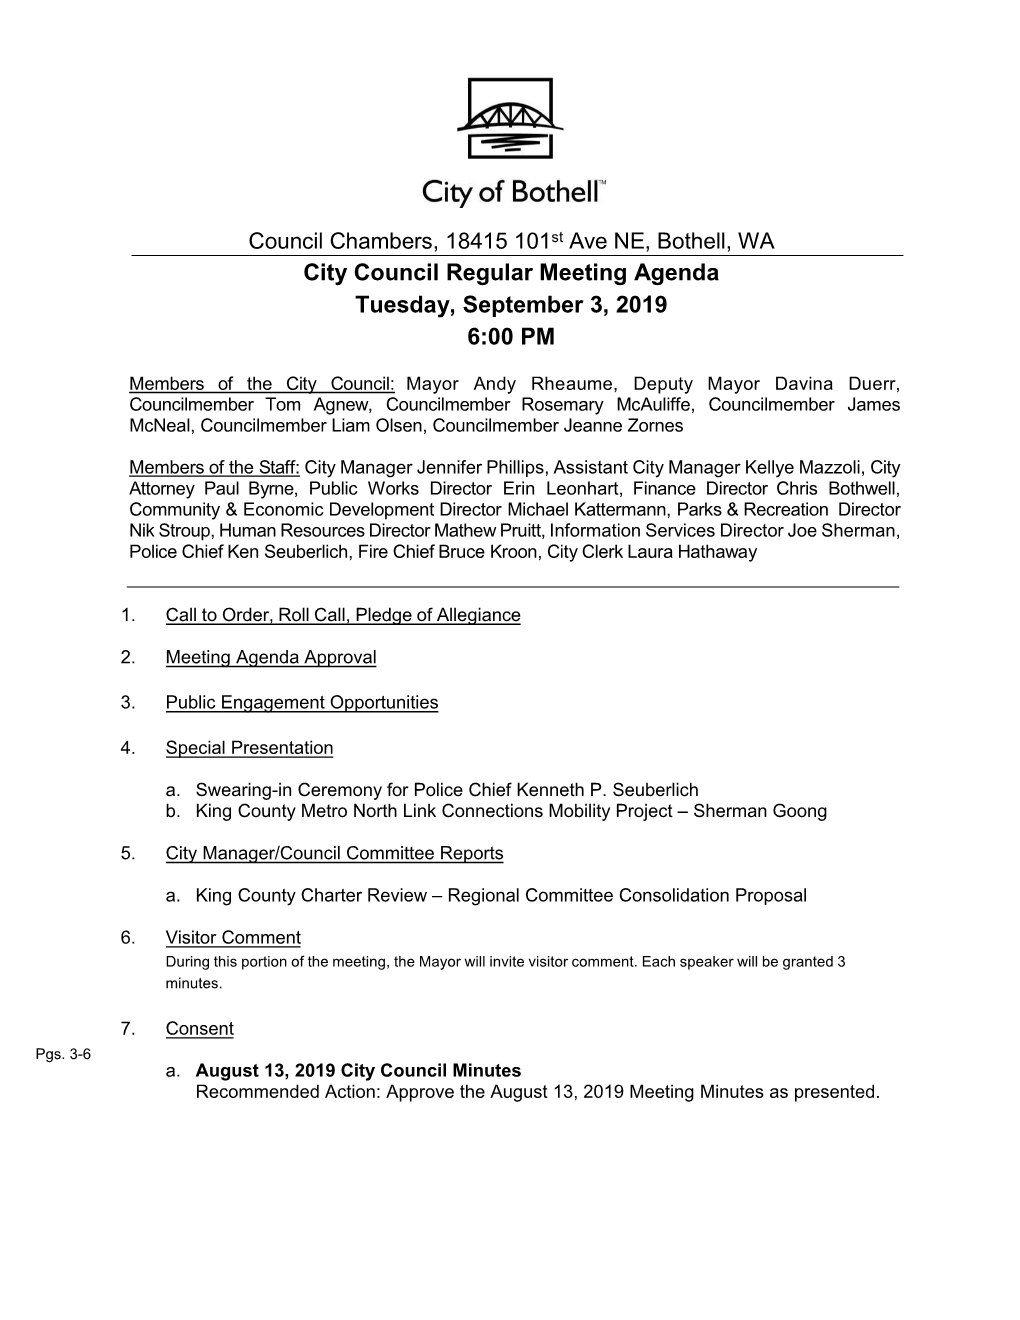 City Council Regular Meeting Agenda Tuesday, September 3, 2019 6:00 PM